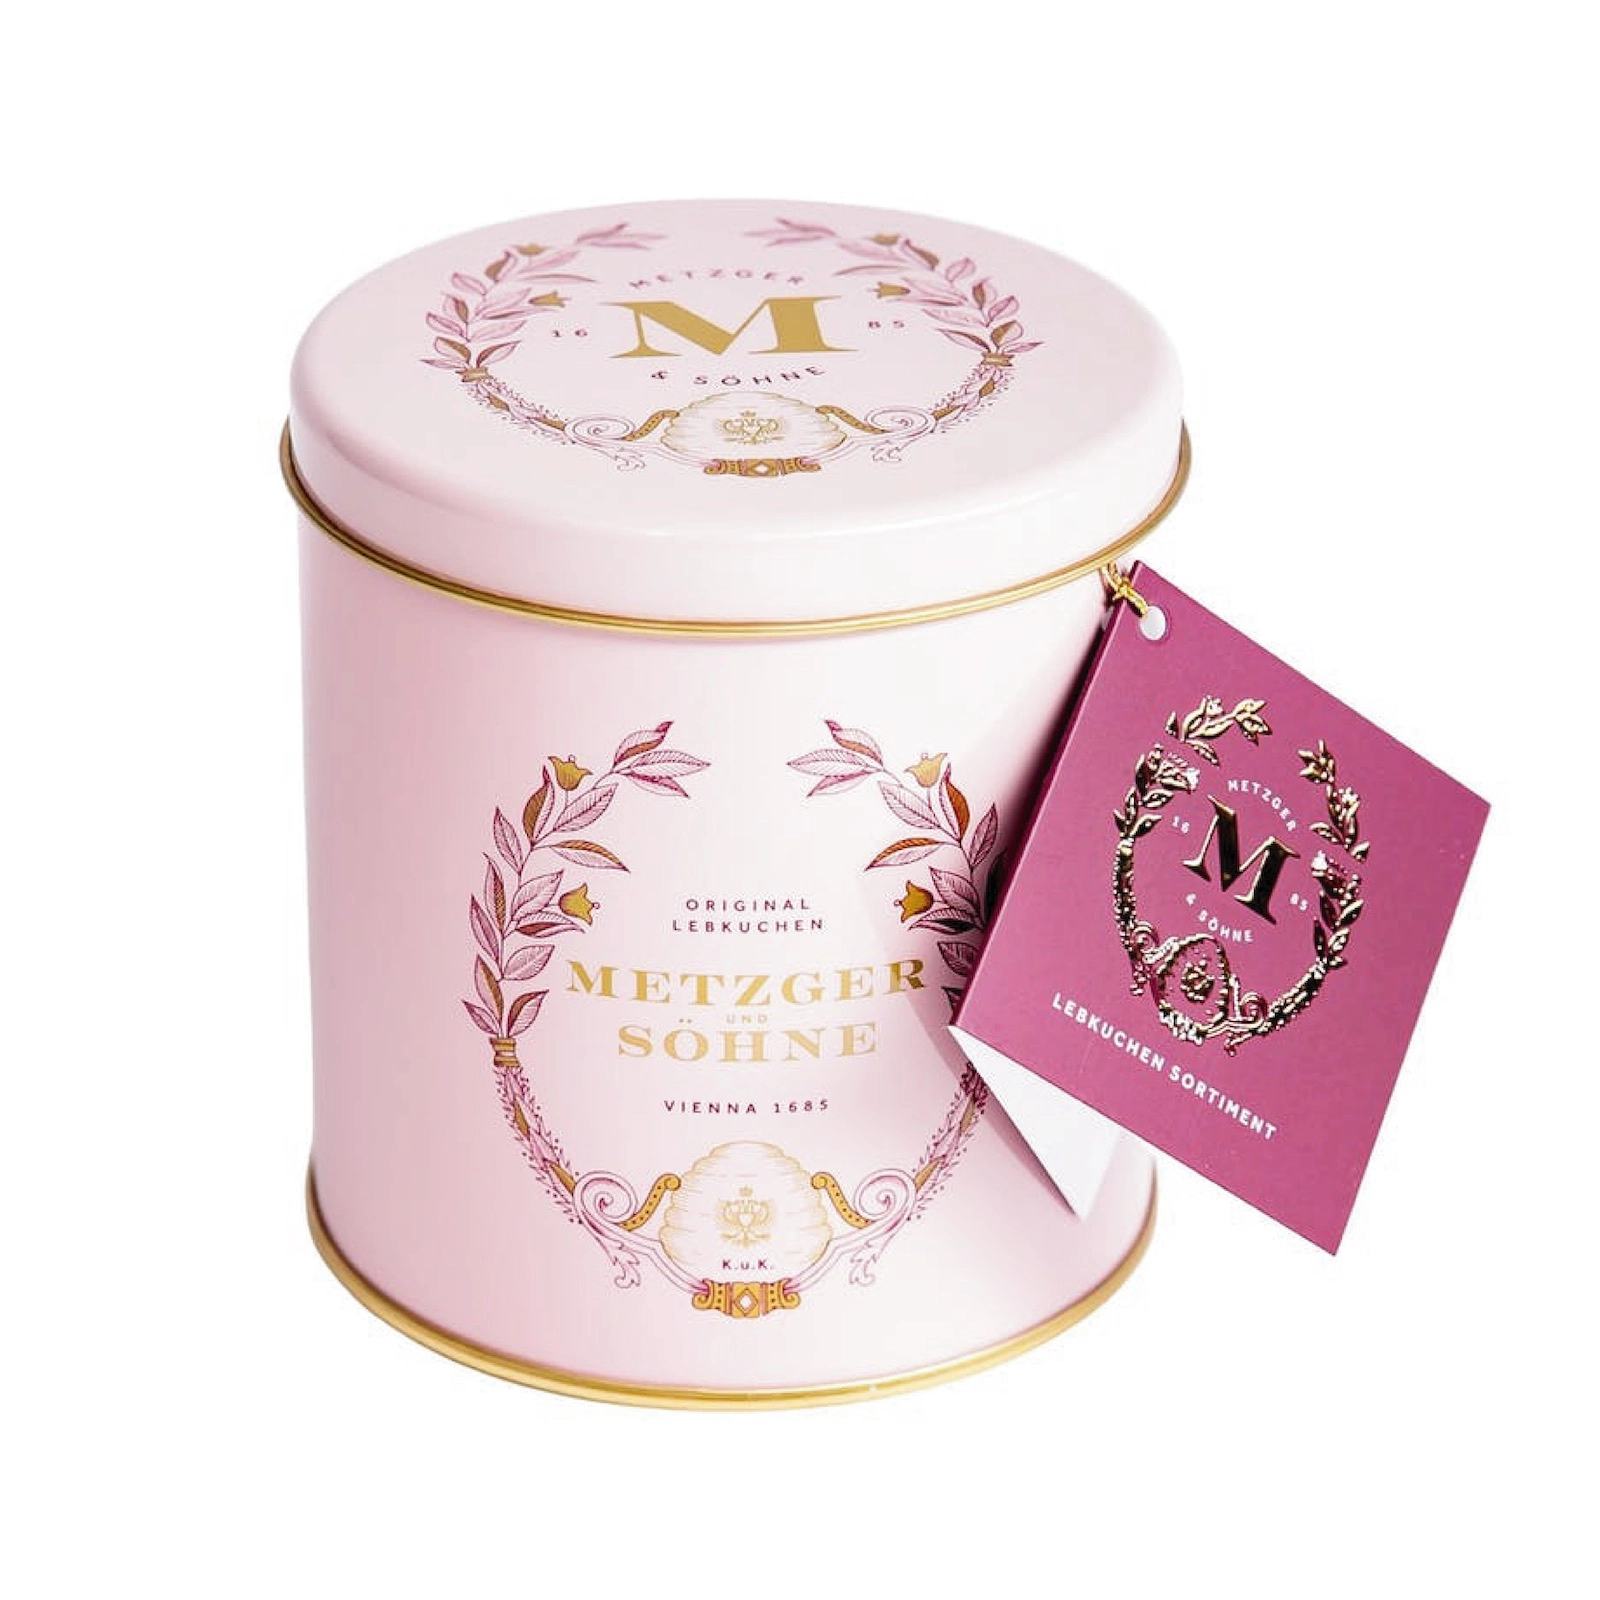 Piccola Lebkuchen - Selectie de praline și turtă dulce în cutie metalica roz, Metzger und Sohne, 250 g [2]